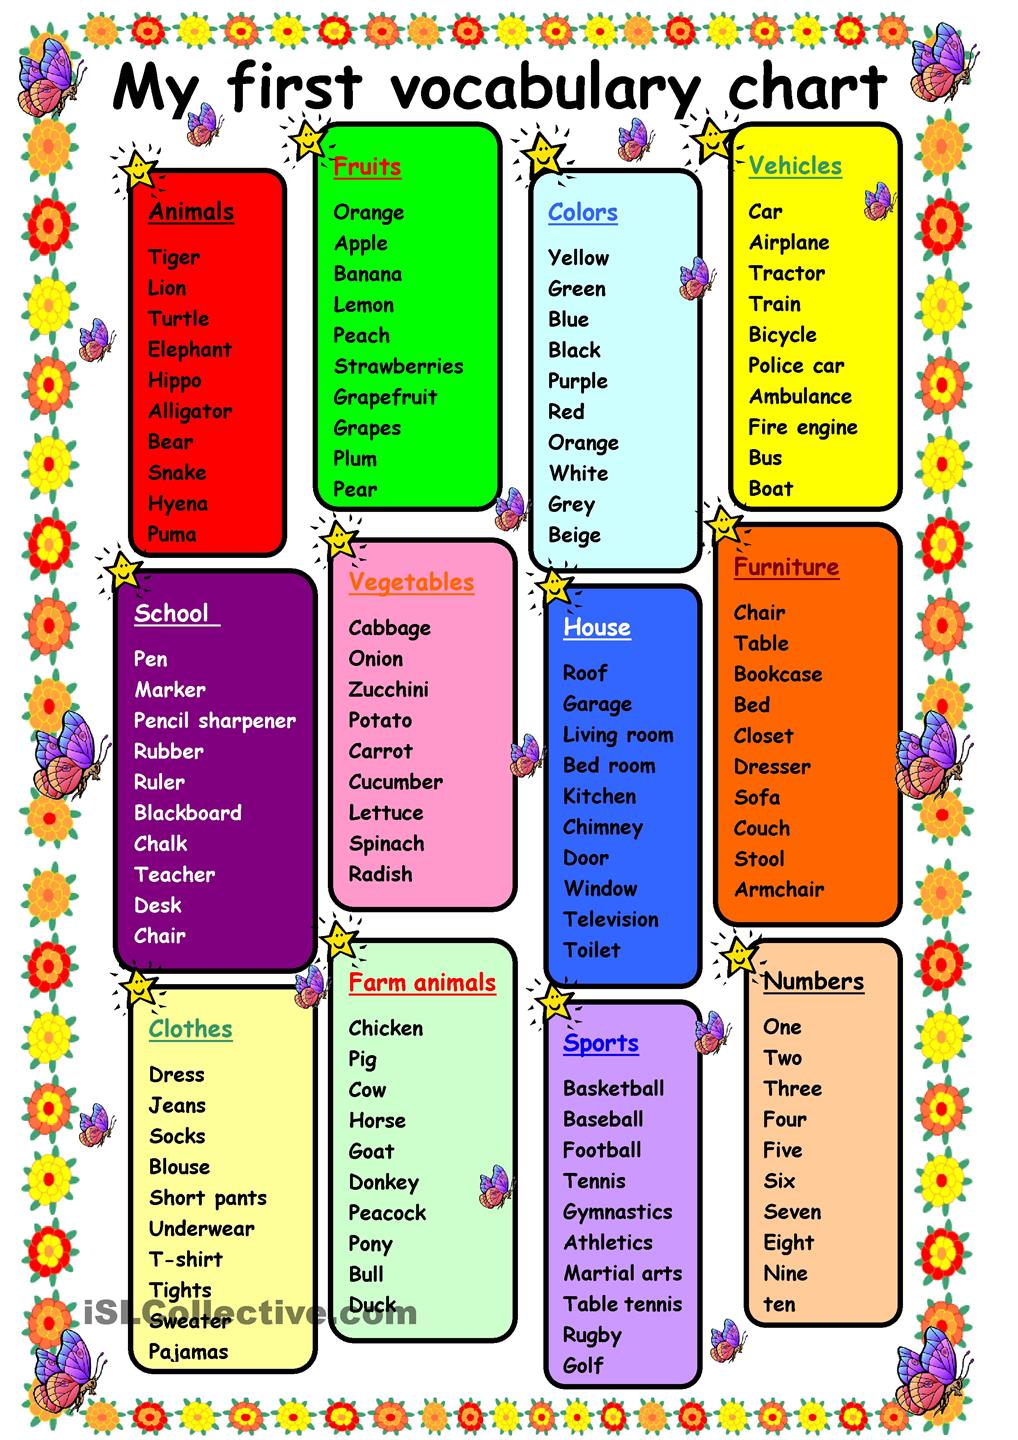 New english vocabulary. Vocabulary for Beginners. Word list for Beginners. Words in English for Beginners. English Vocabulary Words.